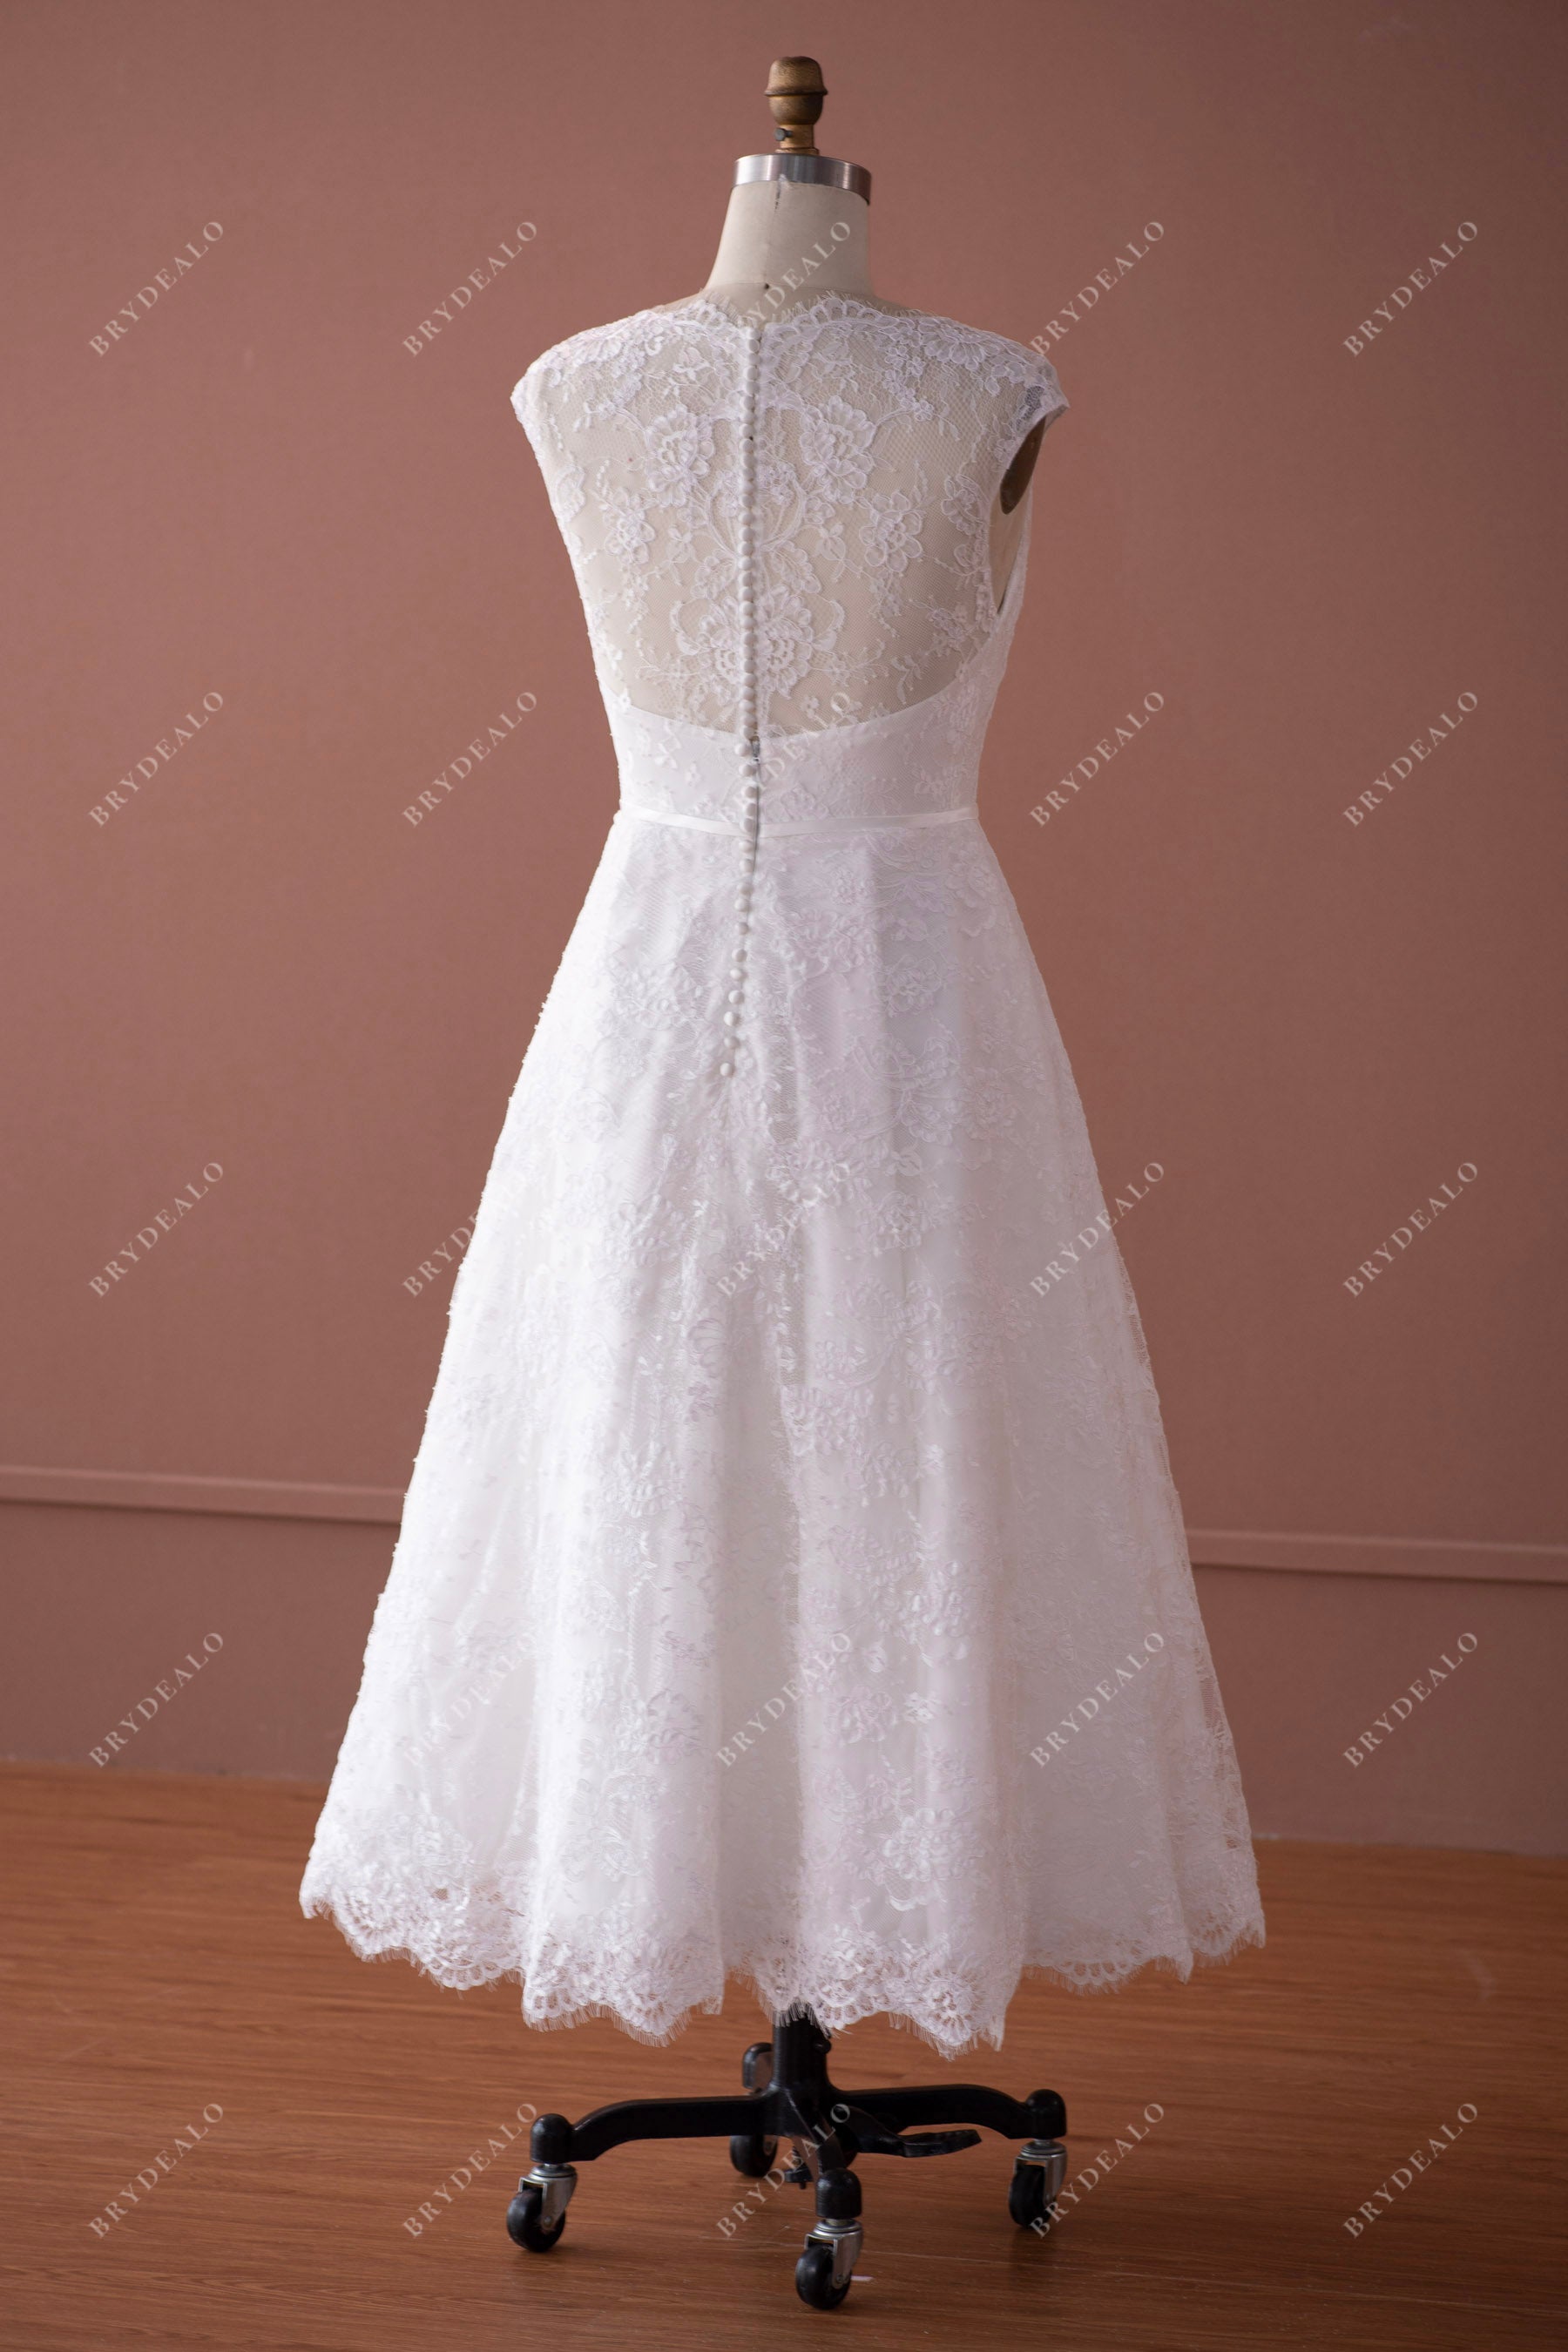 Scallop Neck Lace Tea Length Wedding Dress